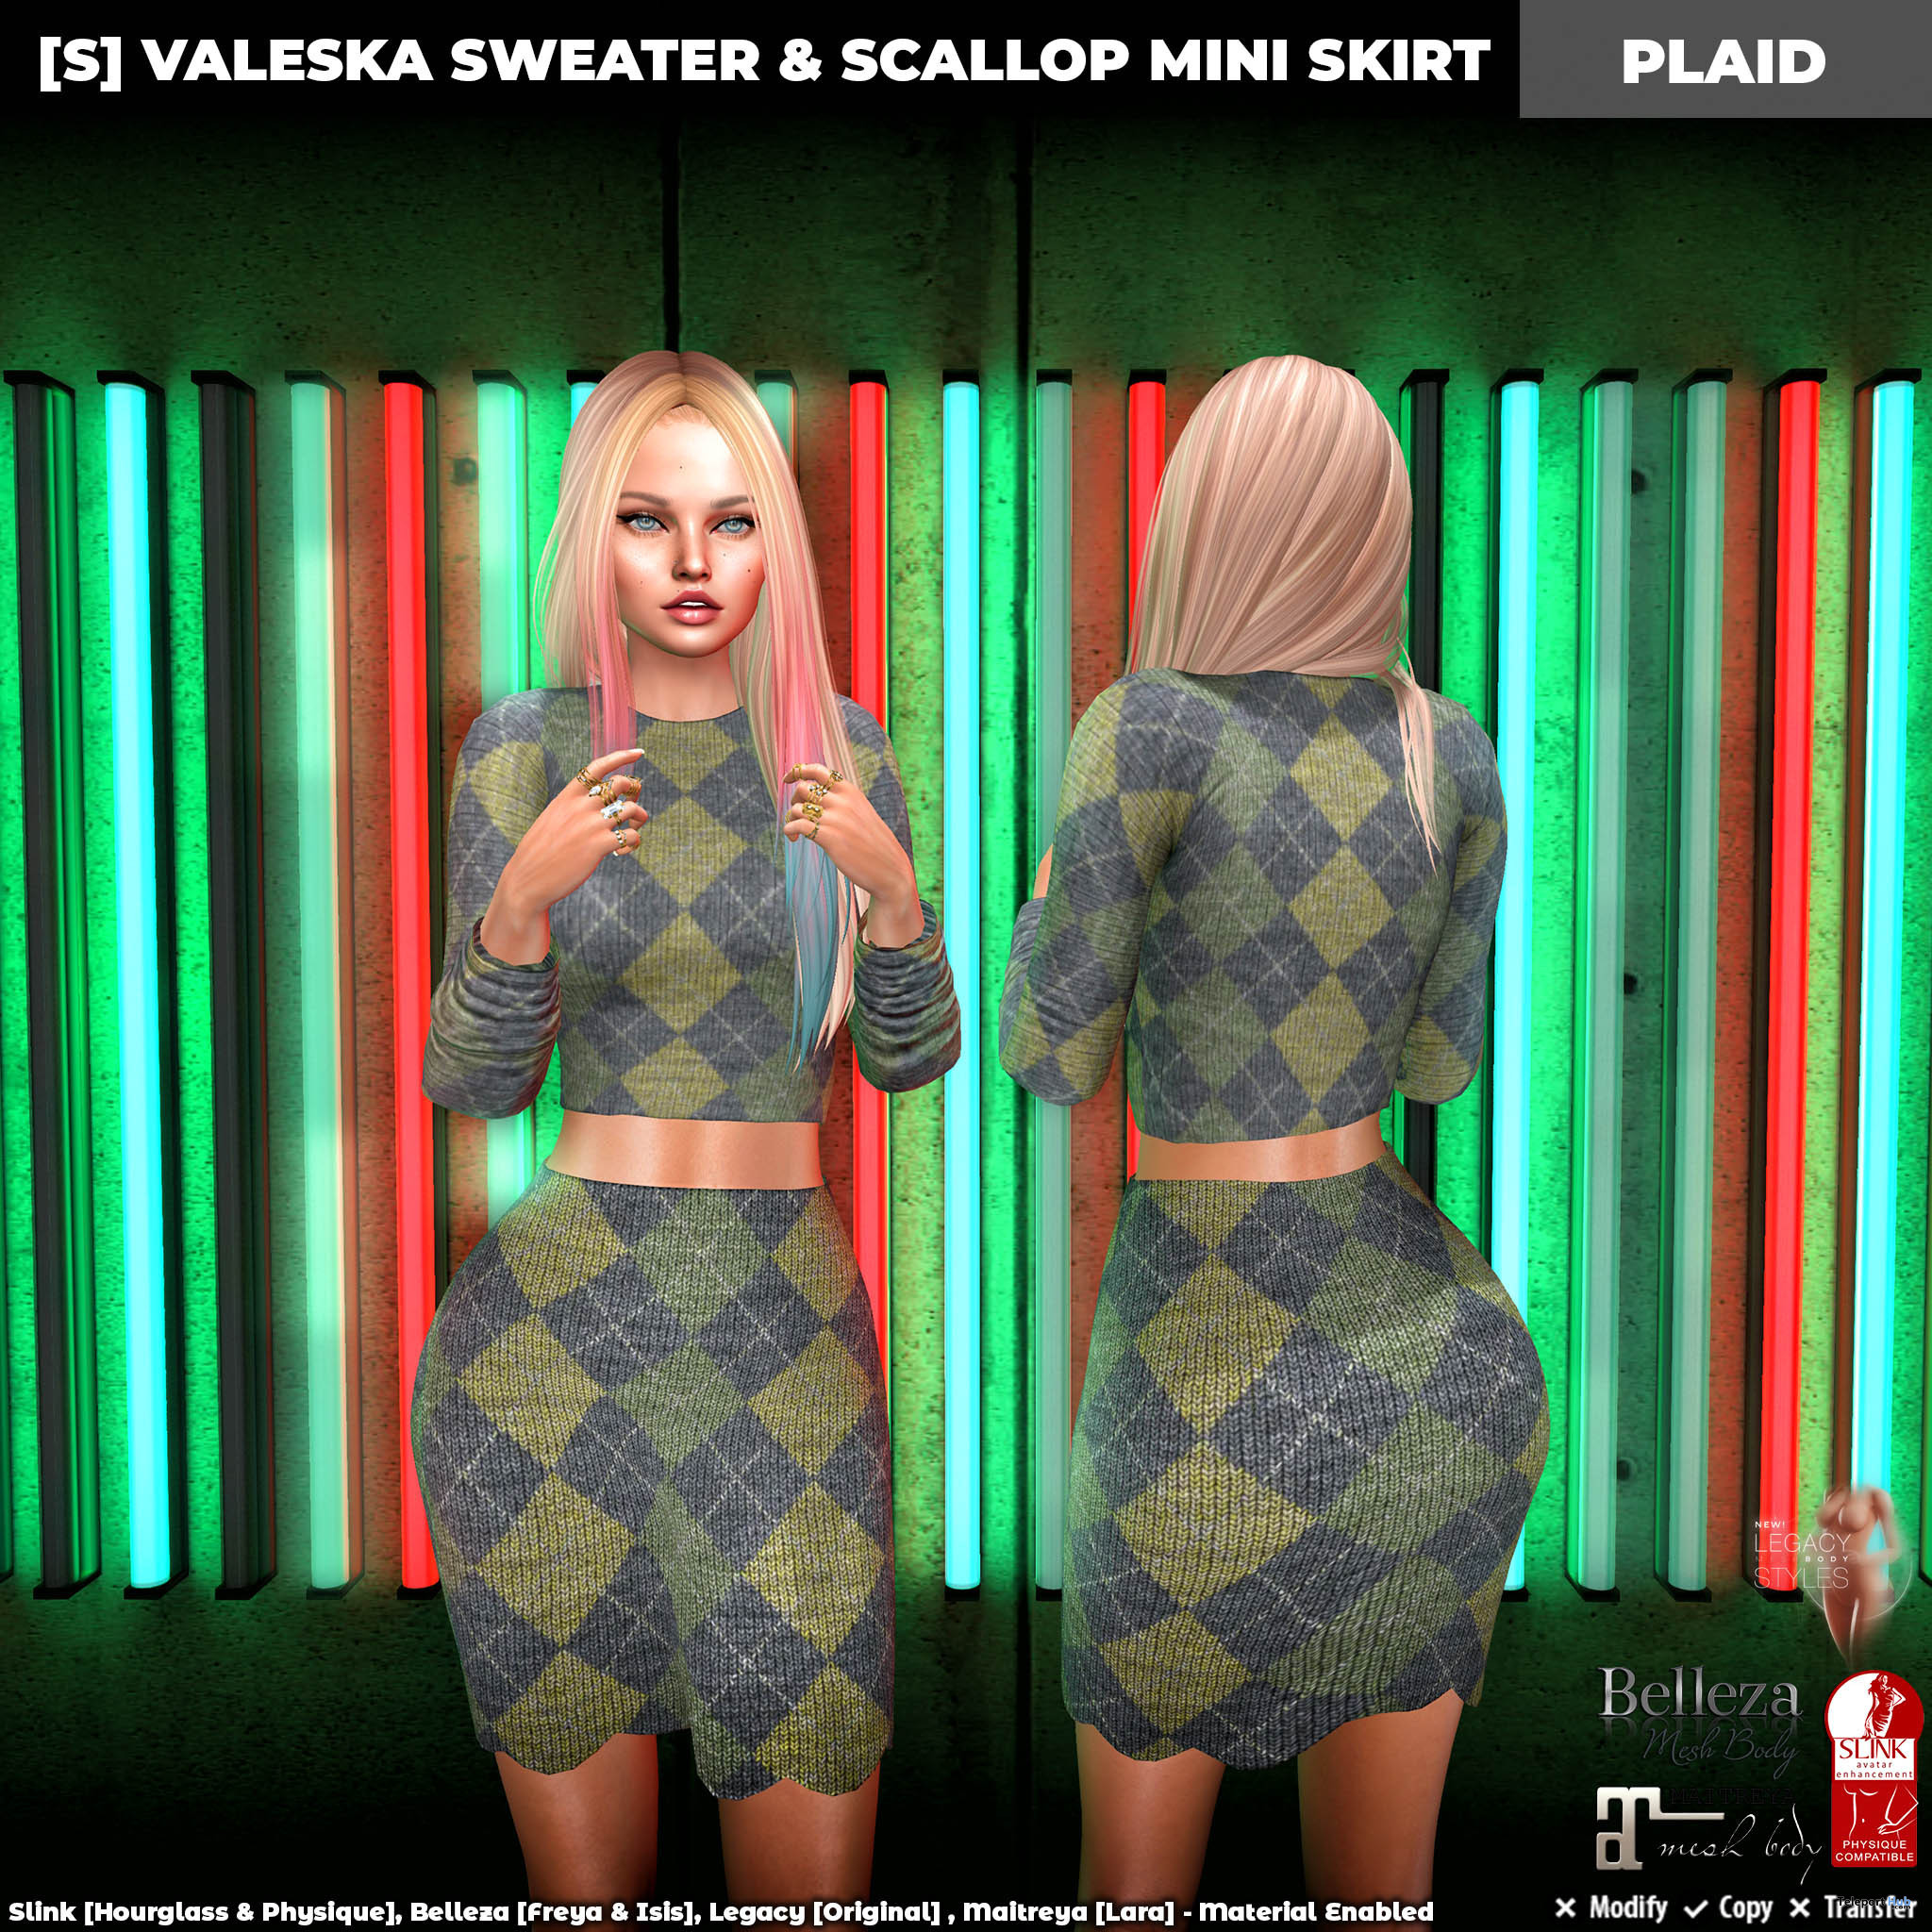 New Release: [S] Valeska Sweater & Scallop Mini Skirt by [satus Inc] - Teleport Hub - teleporthub.com